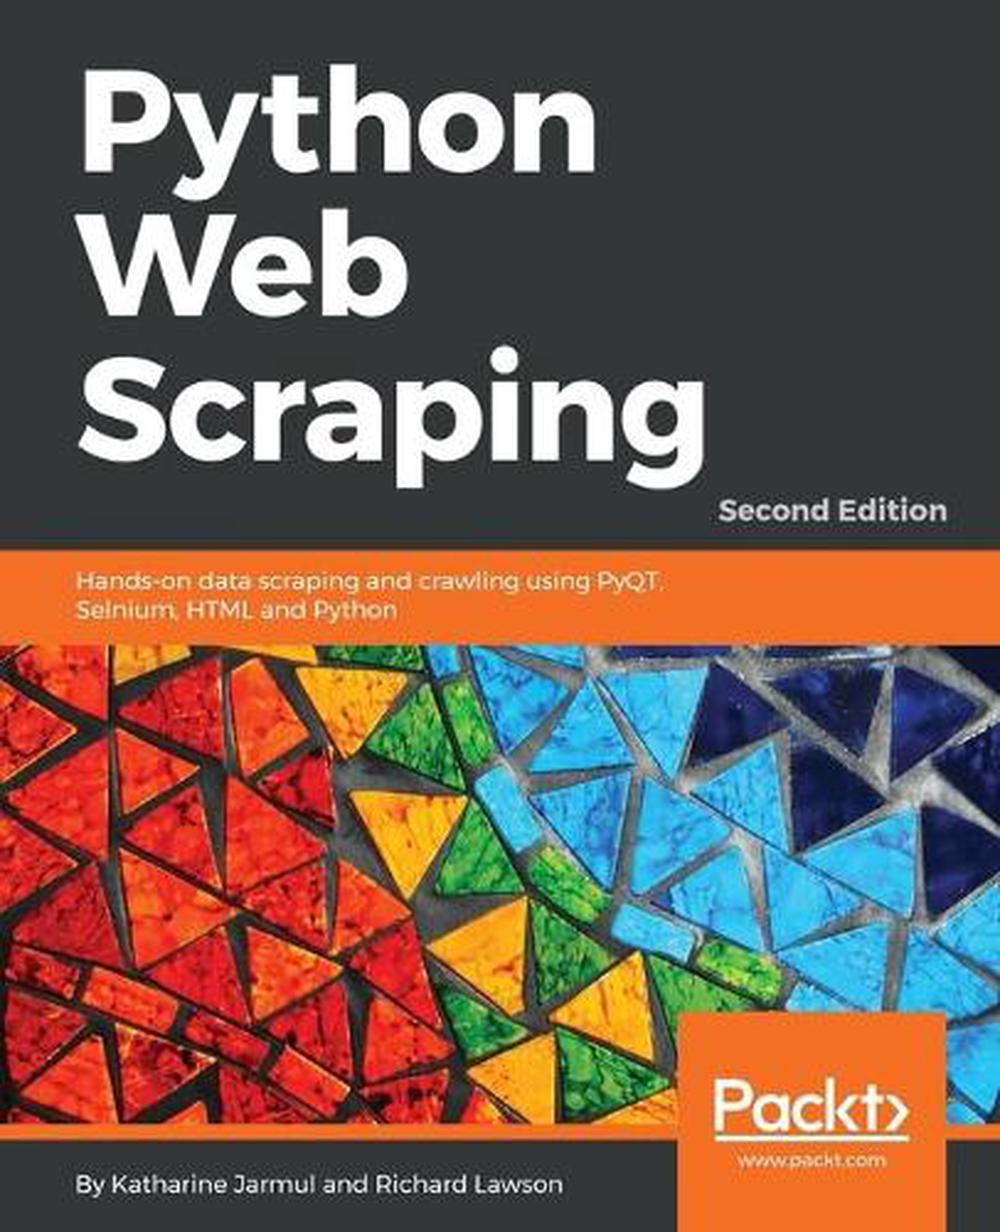 Python Web Scraping Second Edition By Katharine Jarmul English 1133